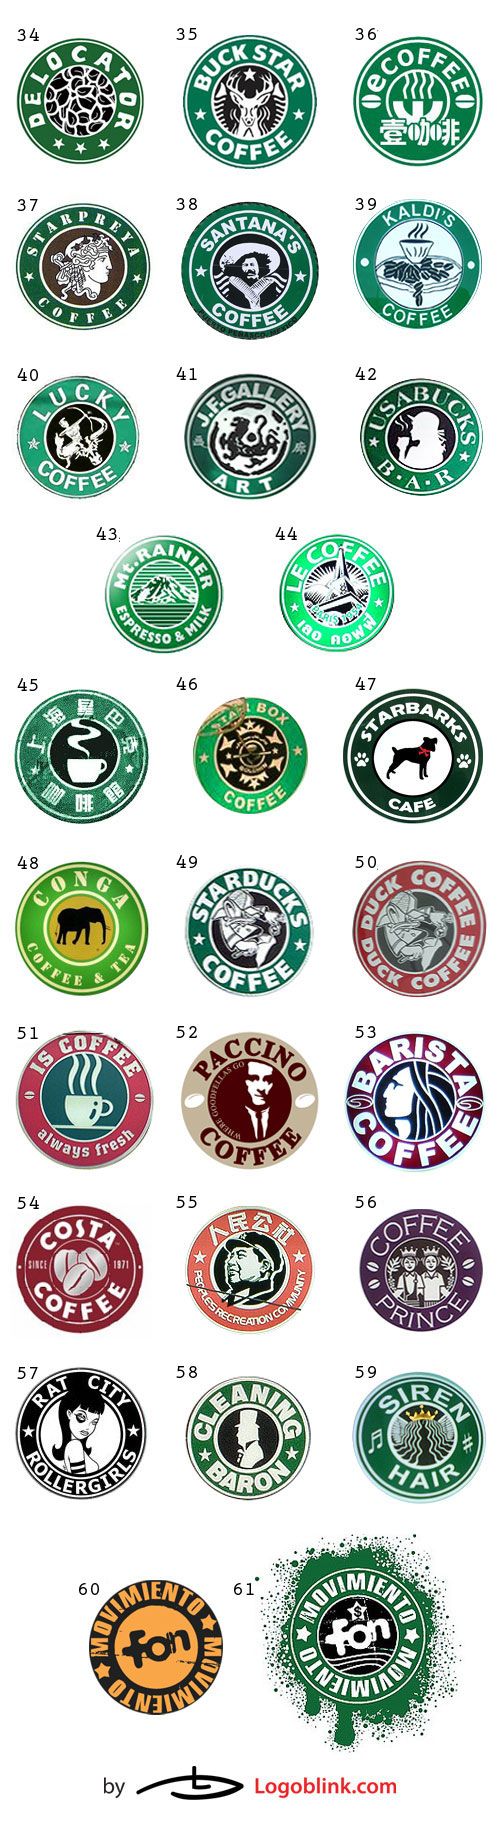 coffee chain logo mania designs